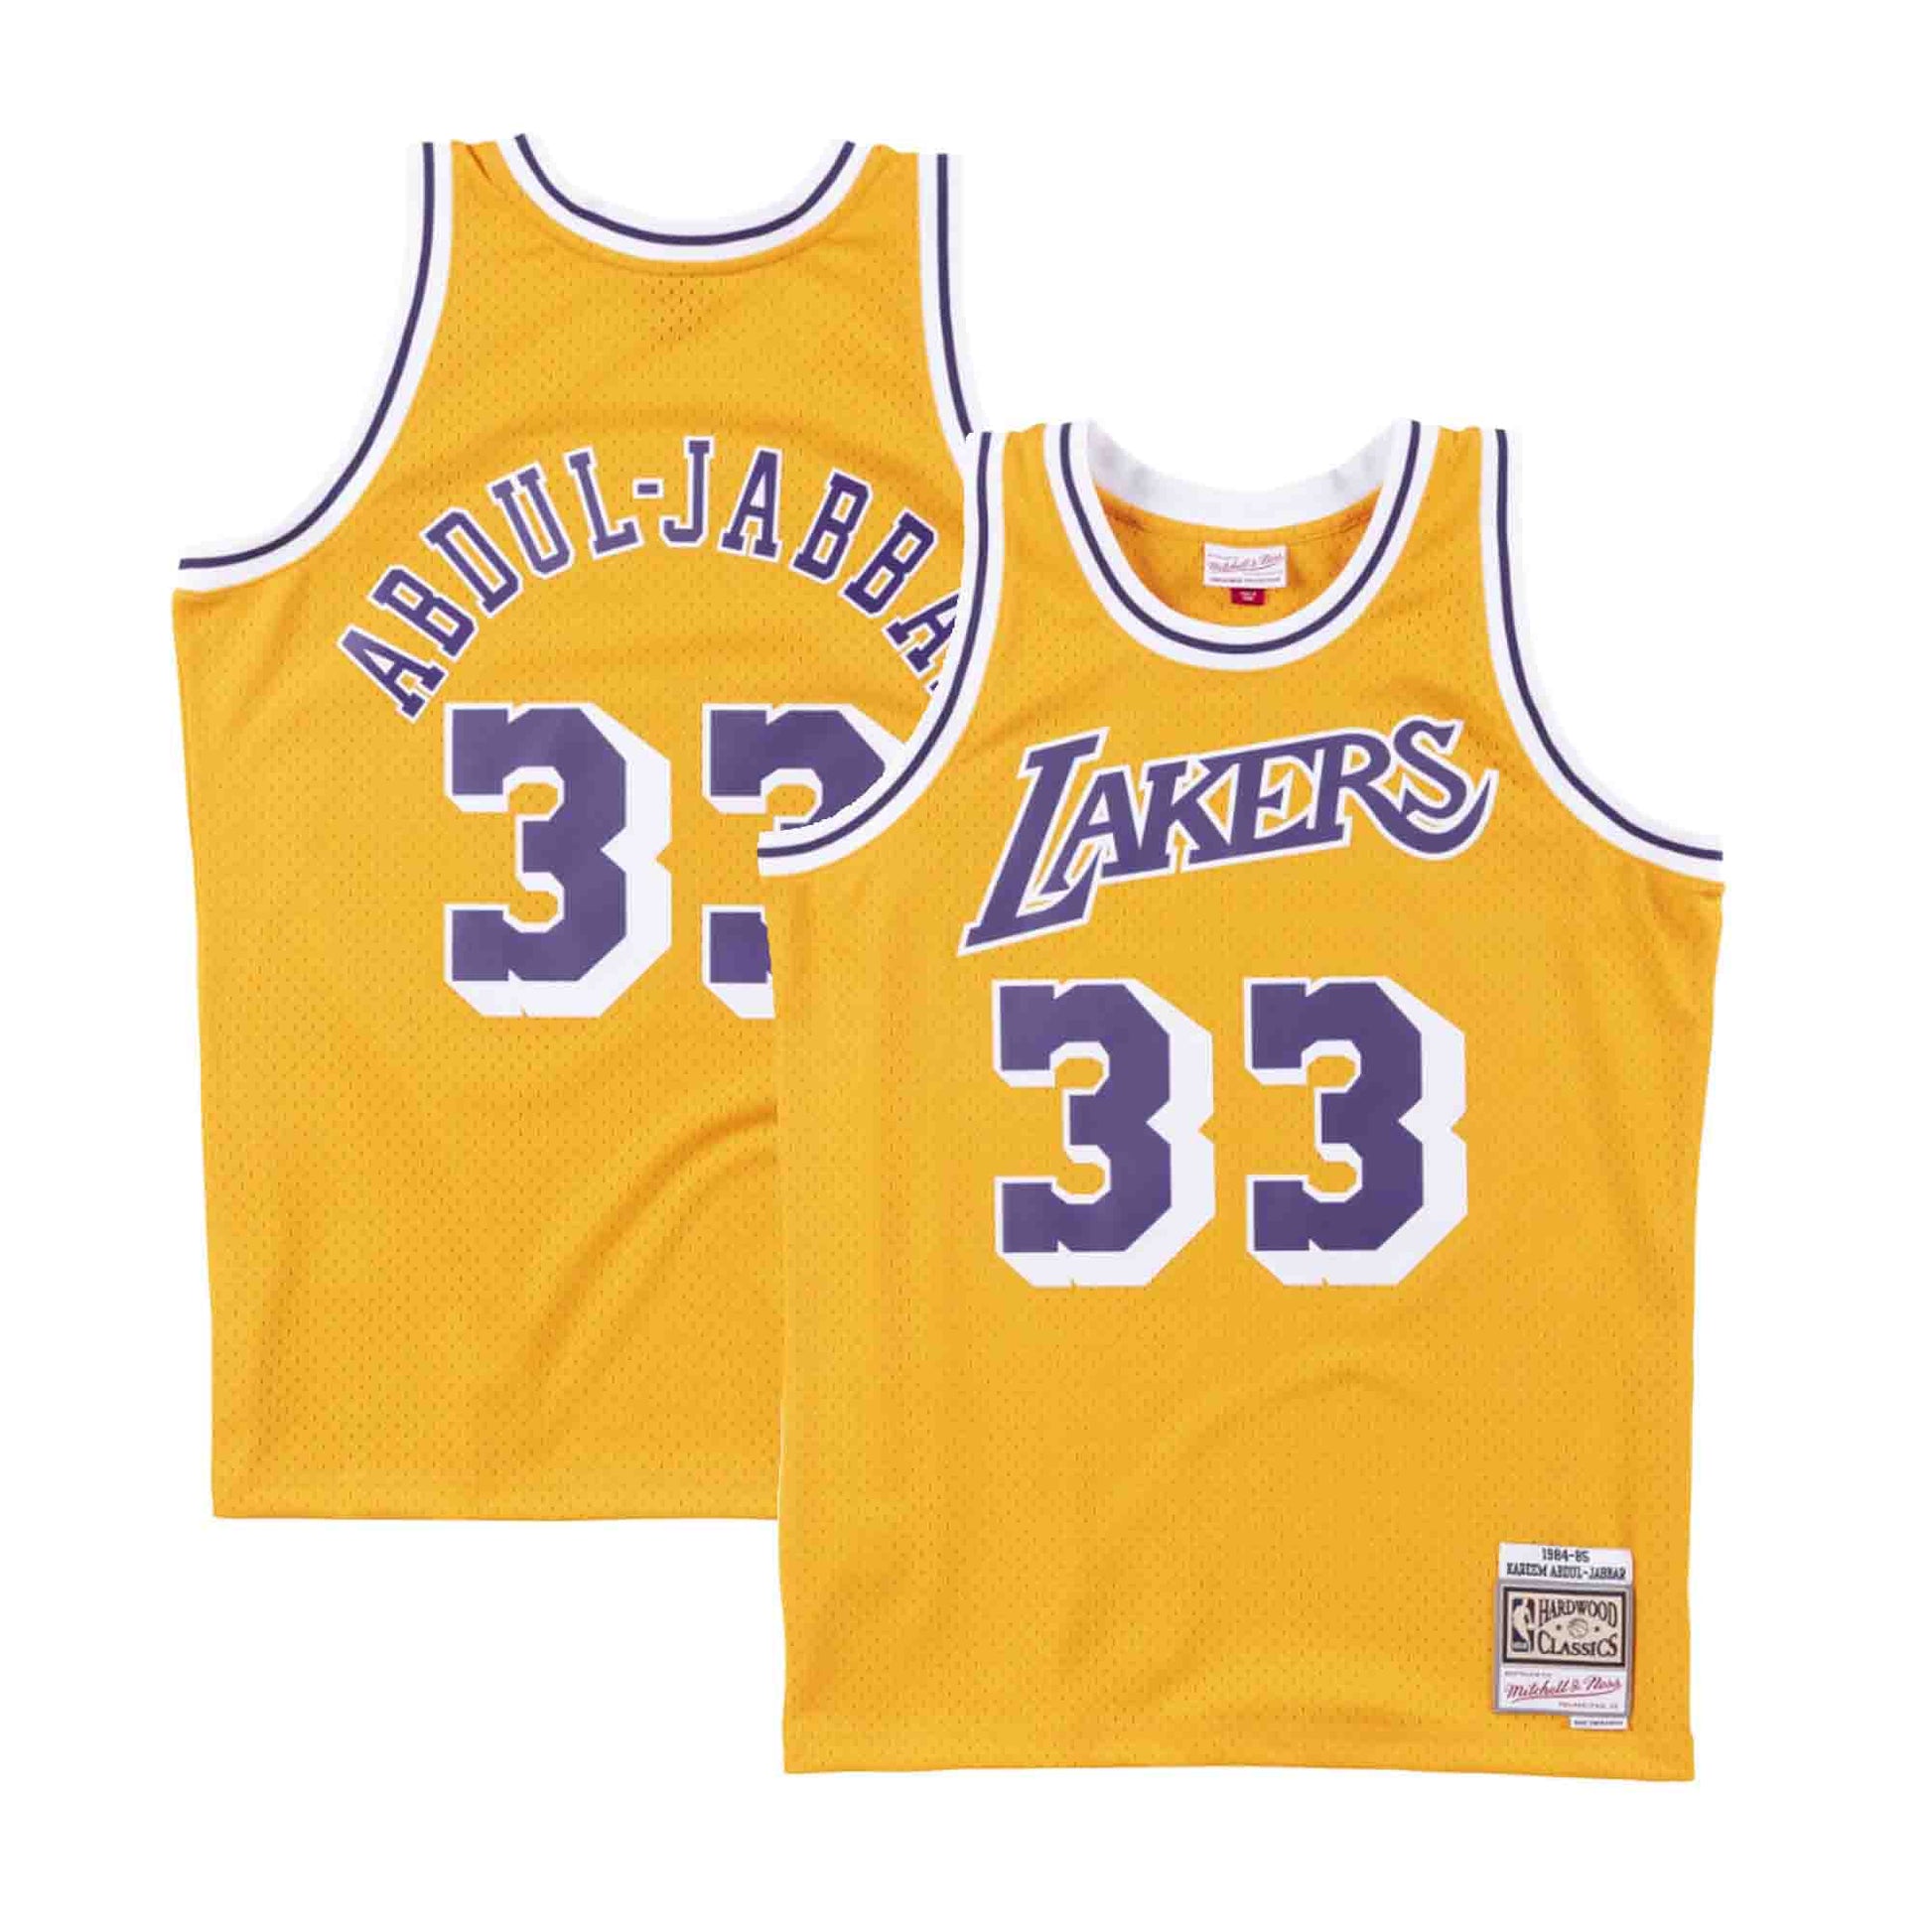 Los Angeles Lakers Gear, Los Angeles Apparel, Lakers Jerseys